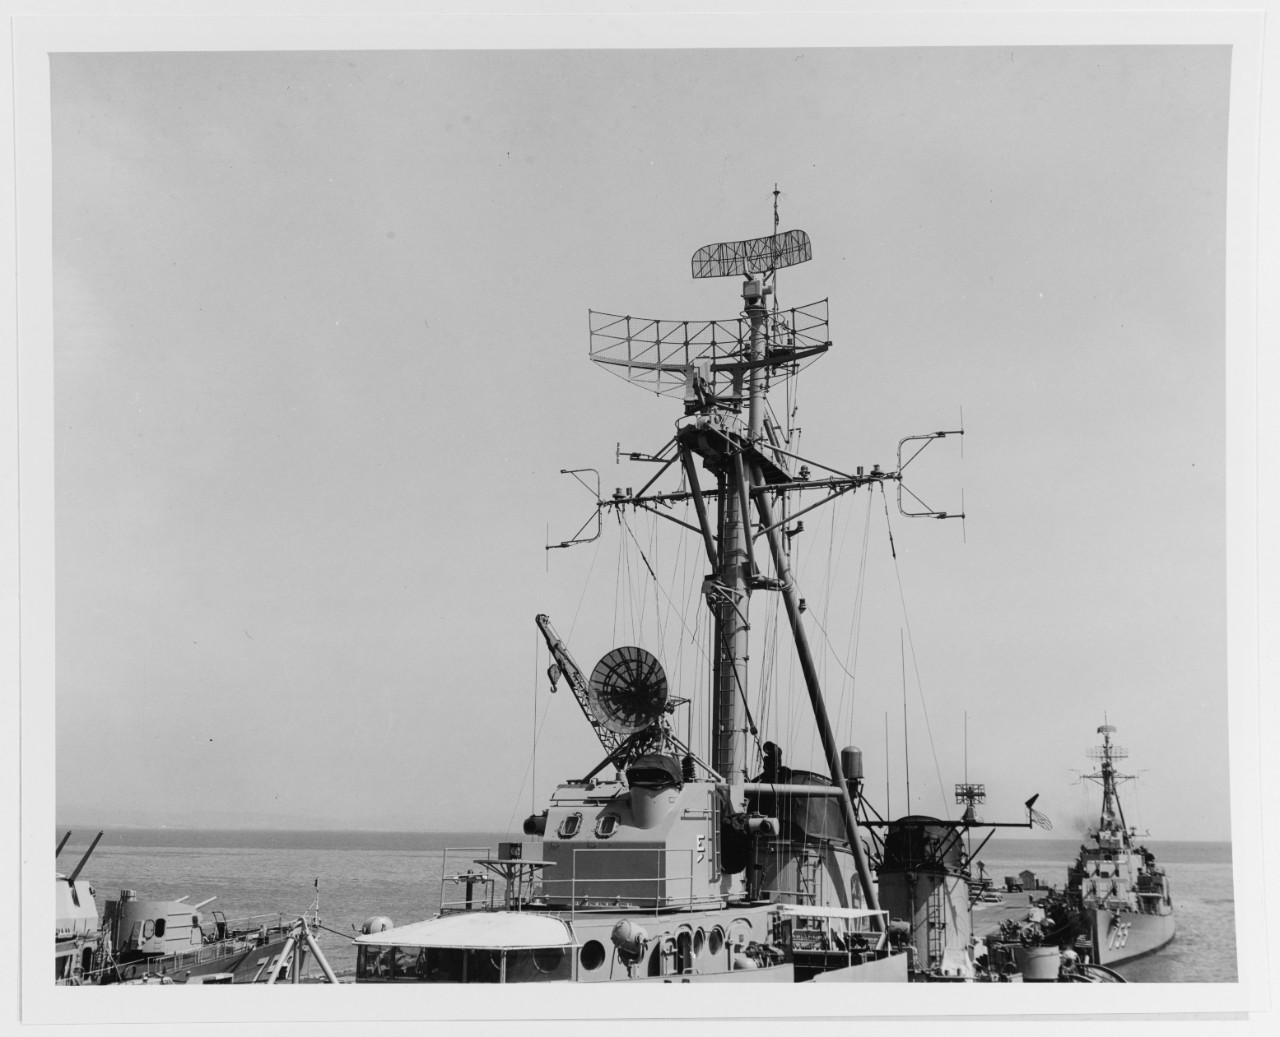 USS BUCK (DD-761)